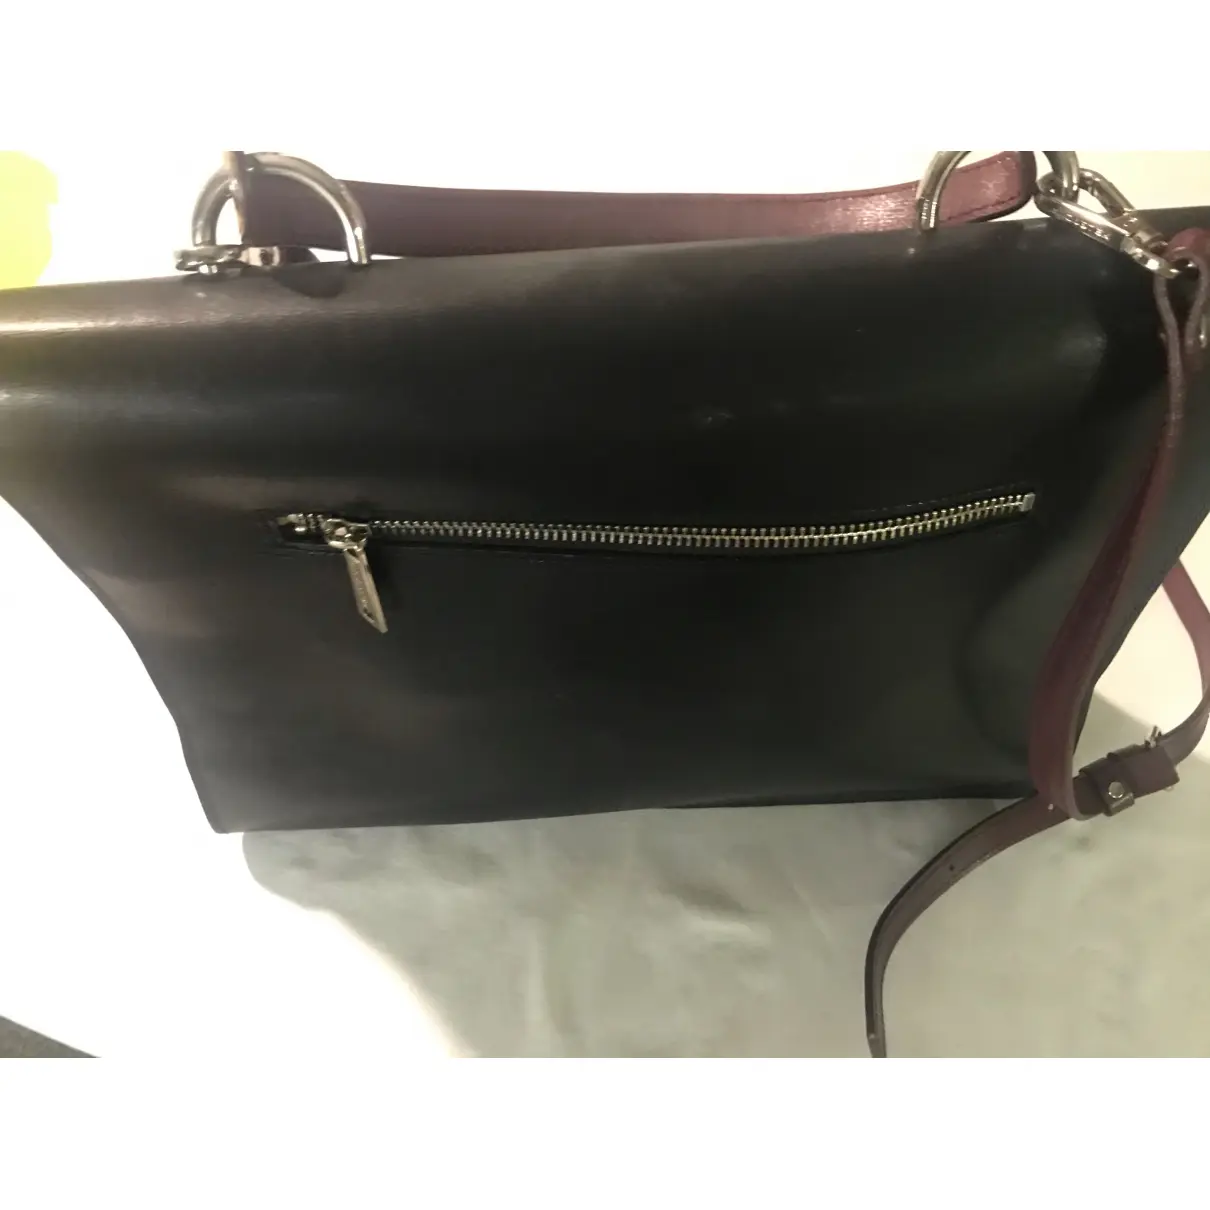 Buy Lancaster Leather satchel online